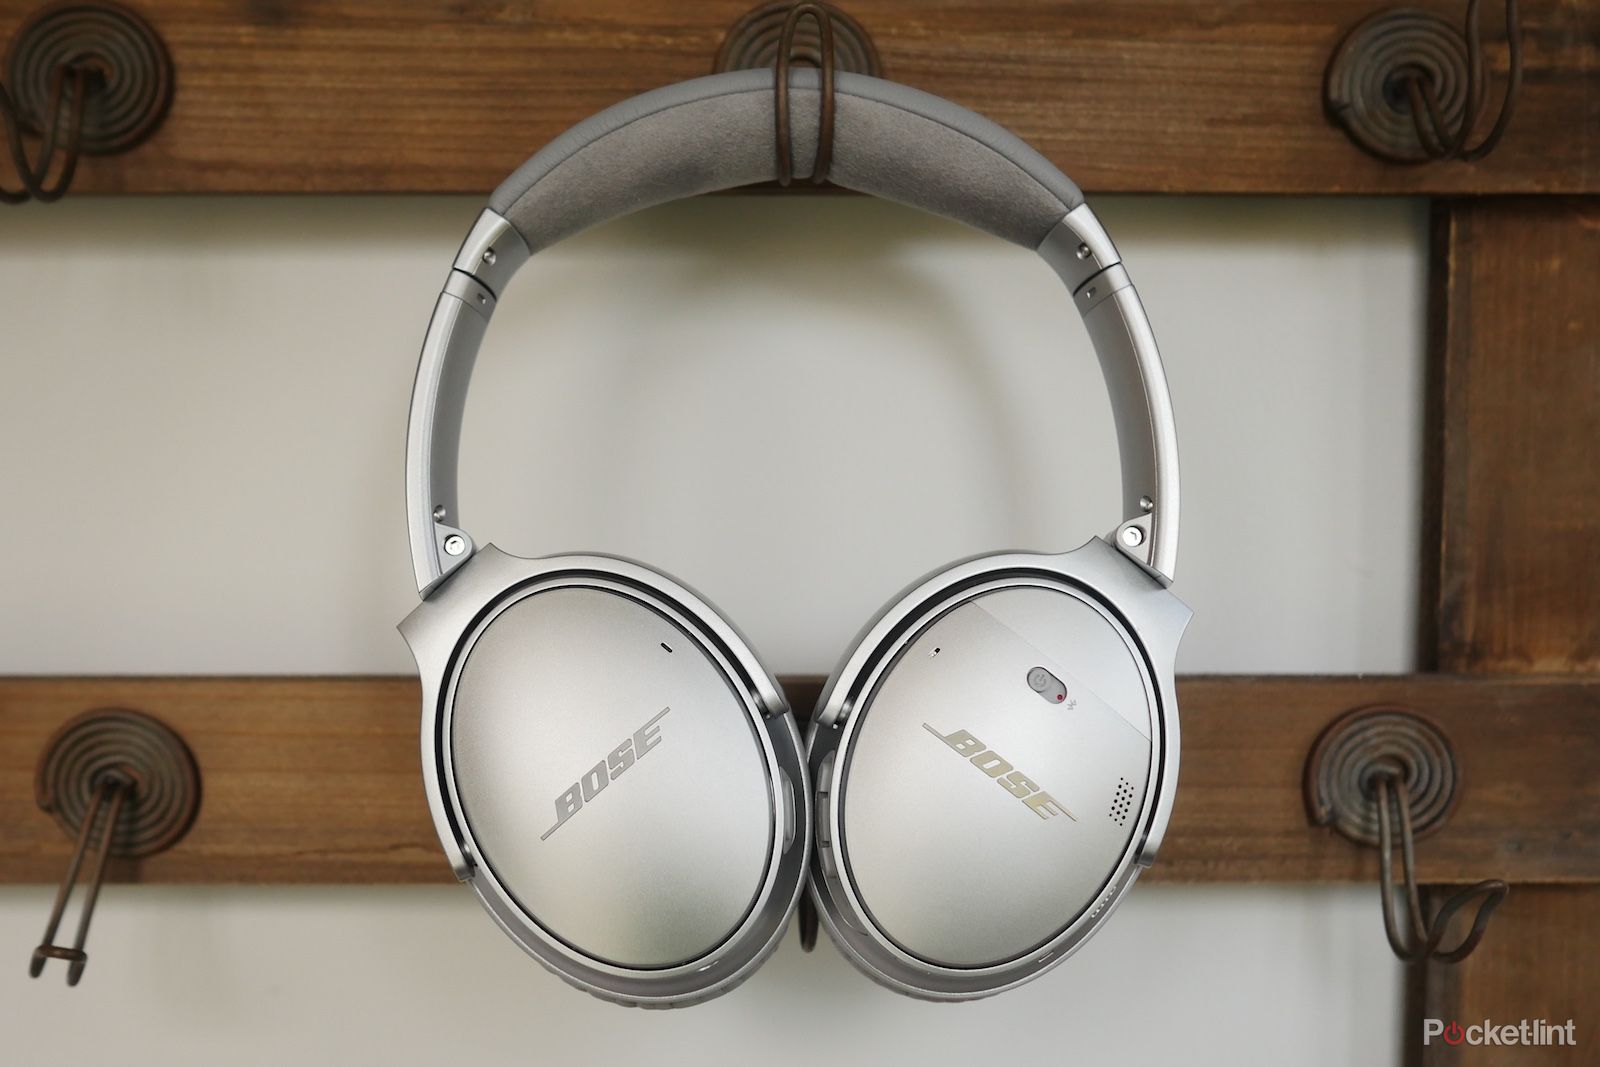 Bose QuietComfort 35 II review: Superb noise-cancelling headphones